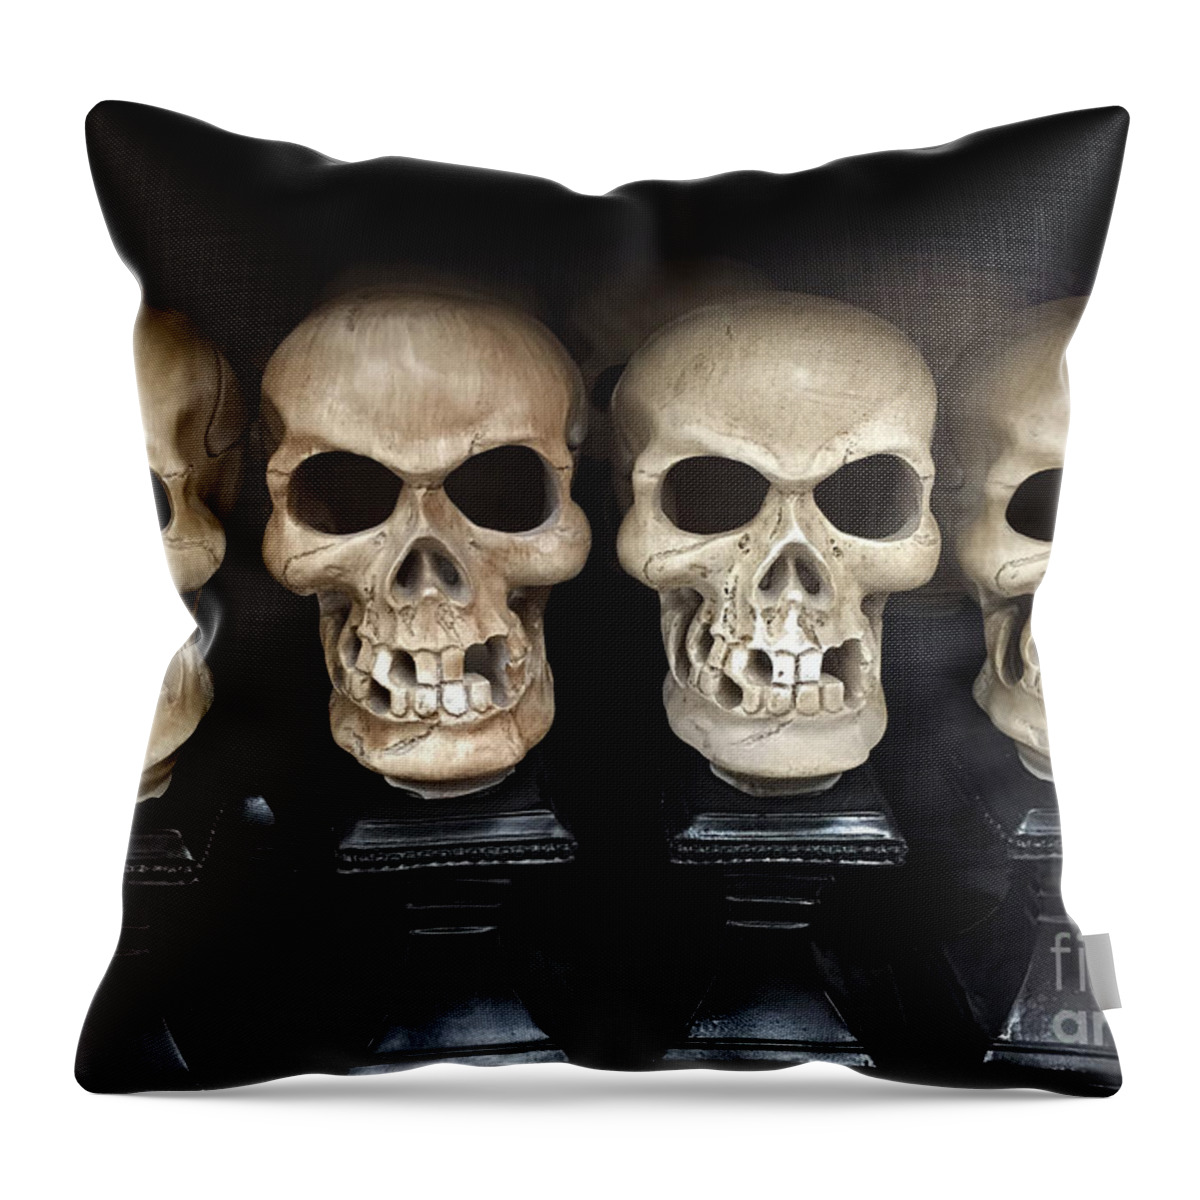 https://render.fineartamerica.com/images/rendered/default/throw-pillow/images/artworkimages/medium/1/gothic-skulls-skeleton-art-halloween-set-of-skulls-spooky-skeleton-heads-kathy-fornal.jpg?&targetx=-128&targety=-1&imagewidth=717&imageheight=479&modelwidth=479&modelheight=479&backgroundcolor=C8B79C&orientation=0&producttype=throwpillow-14-14